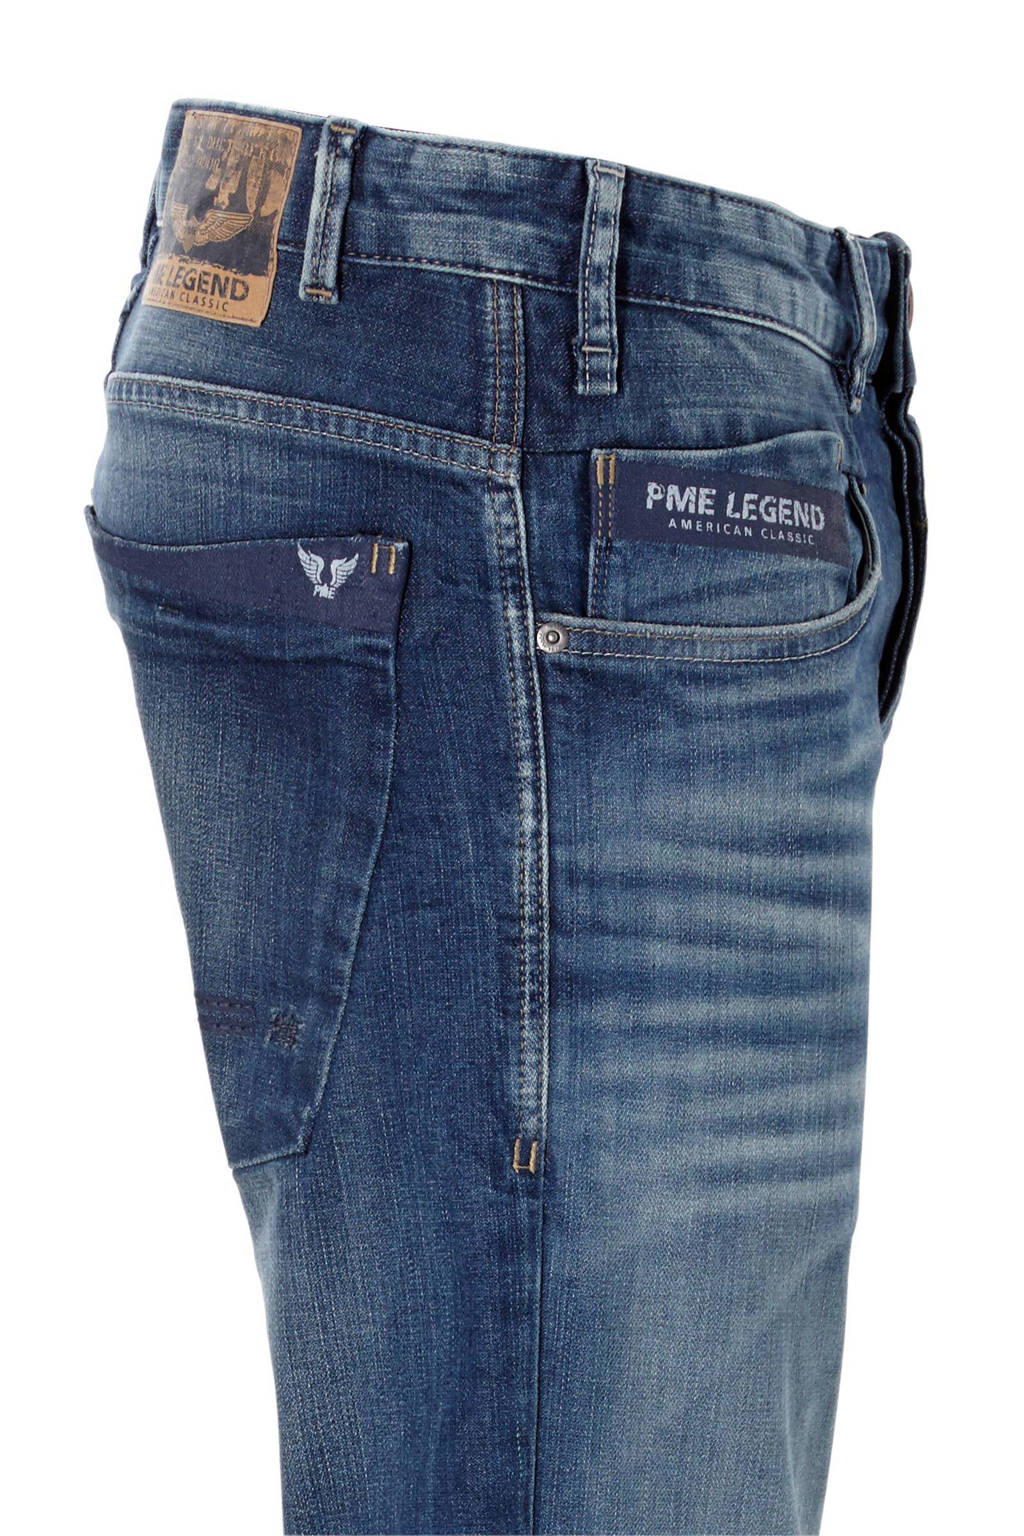 erwt steno Reparatie mogelijk PME Legend regular straight fit jeans Commander medium used | wehkamp